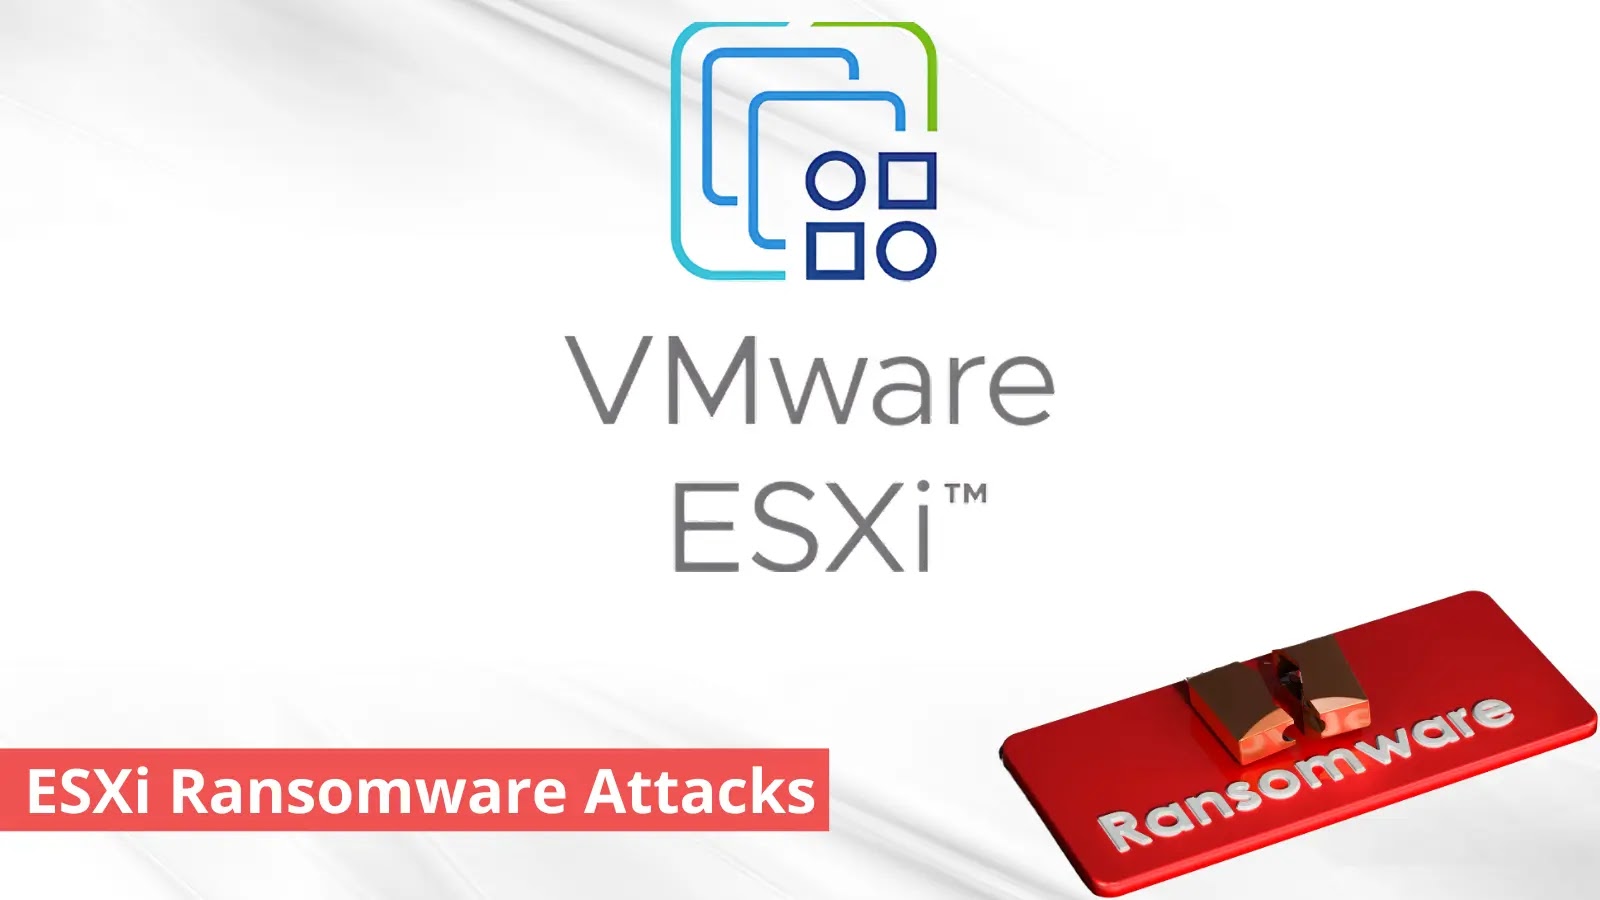 Ransomware Attacks Targeting VMware ESXi Infrastructure Adopt New Pattern